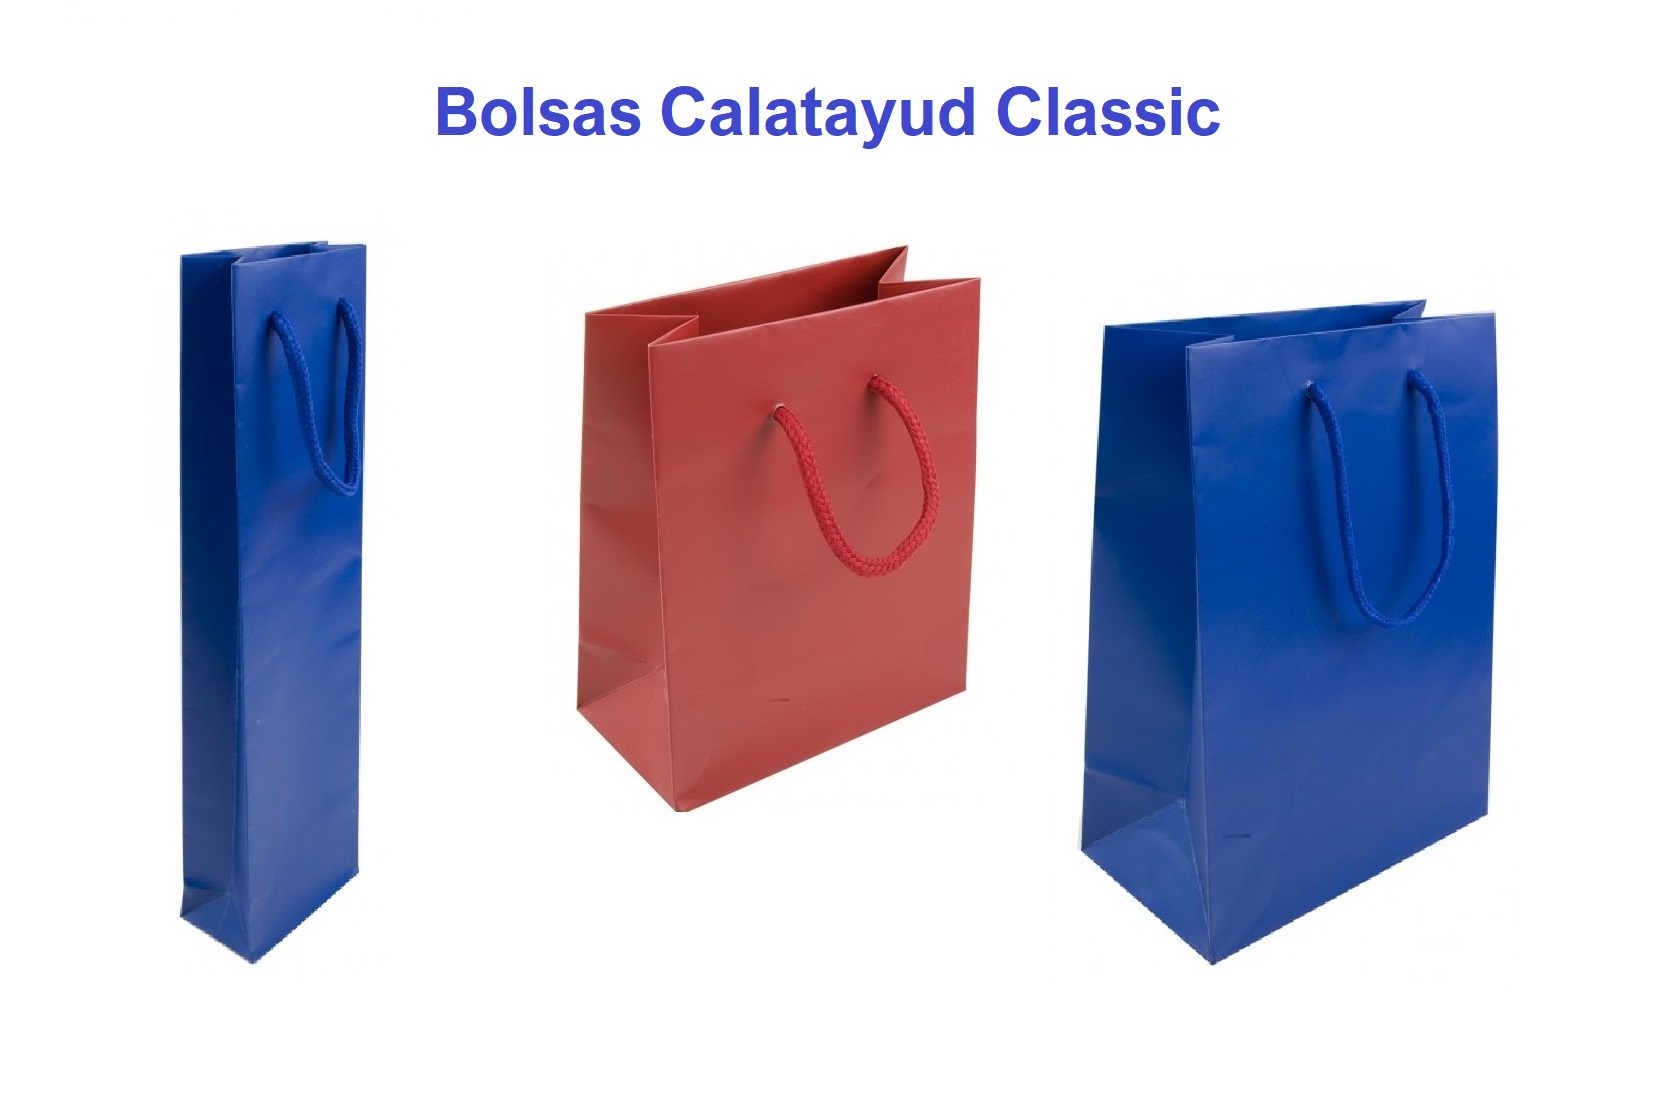 Bolsas Calatayud Classic